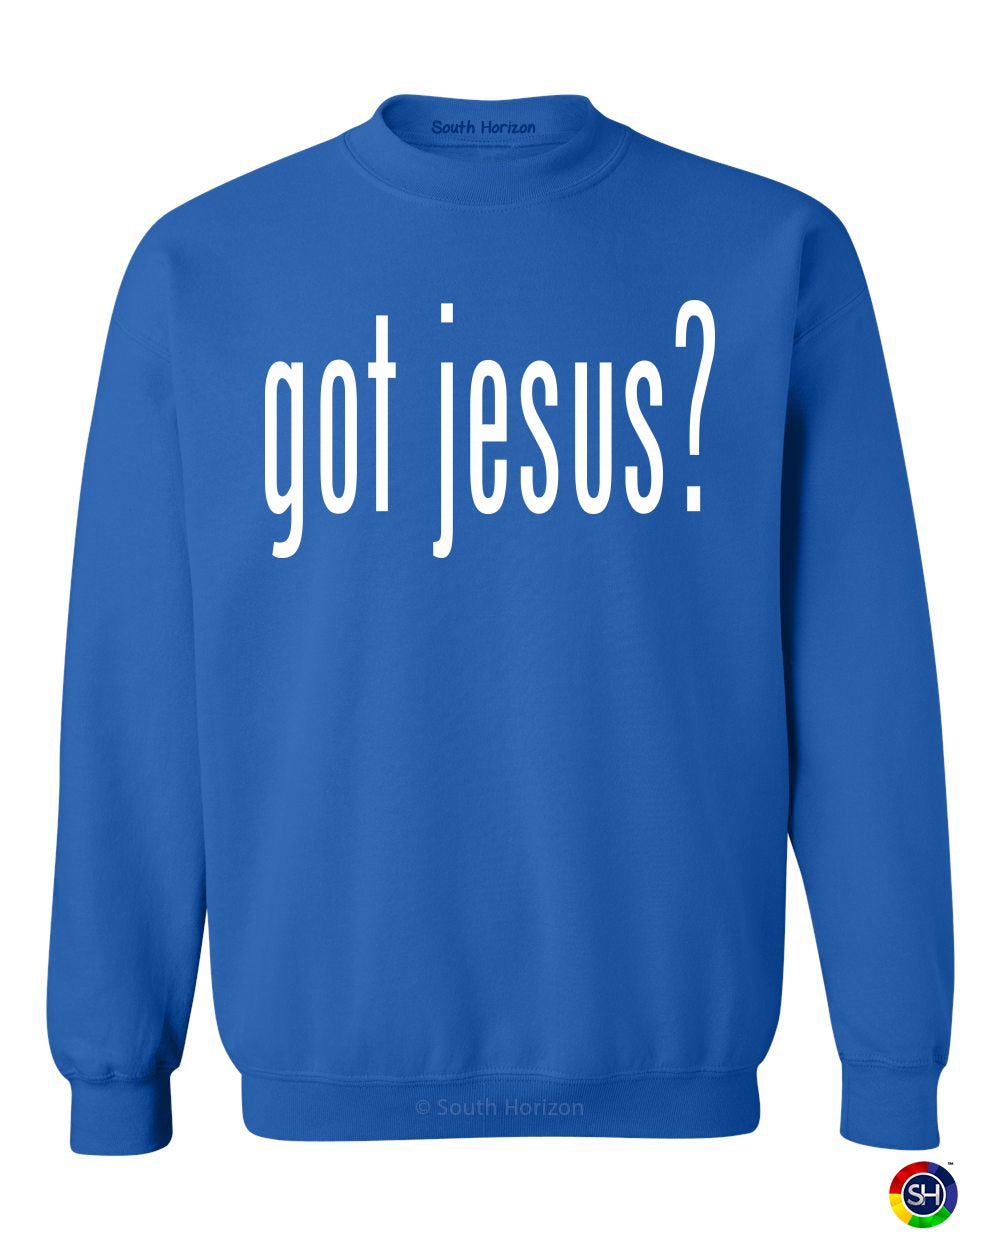 GOT JESUS? on SweatShirt